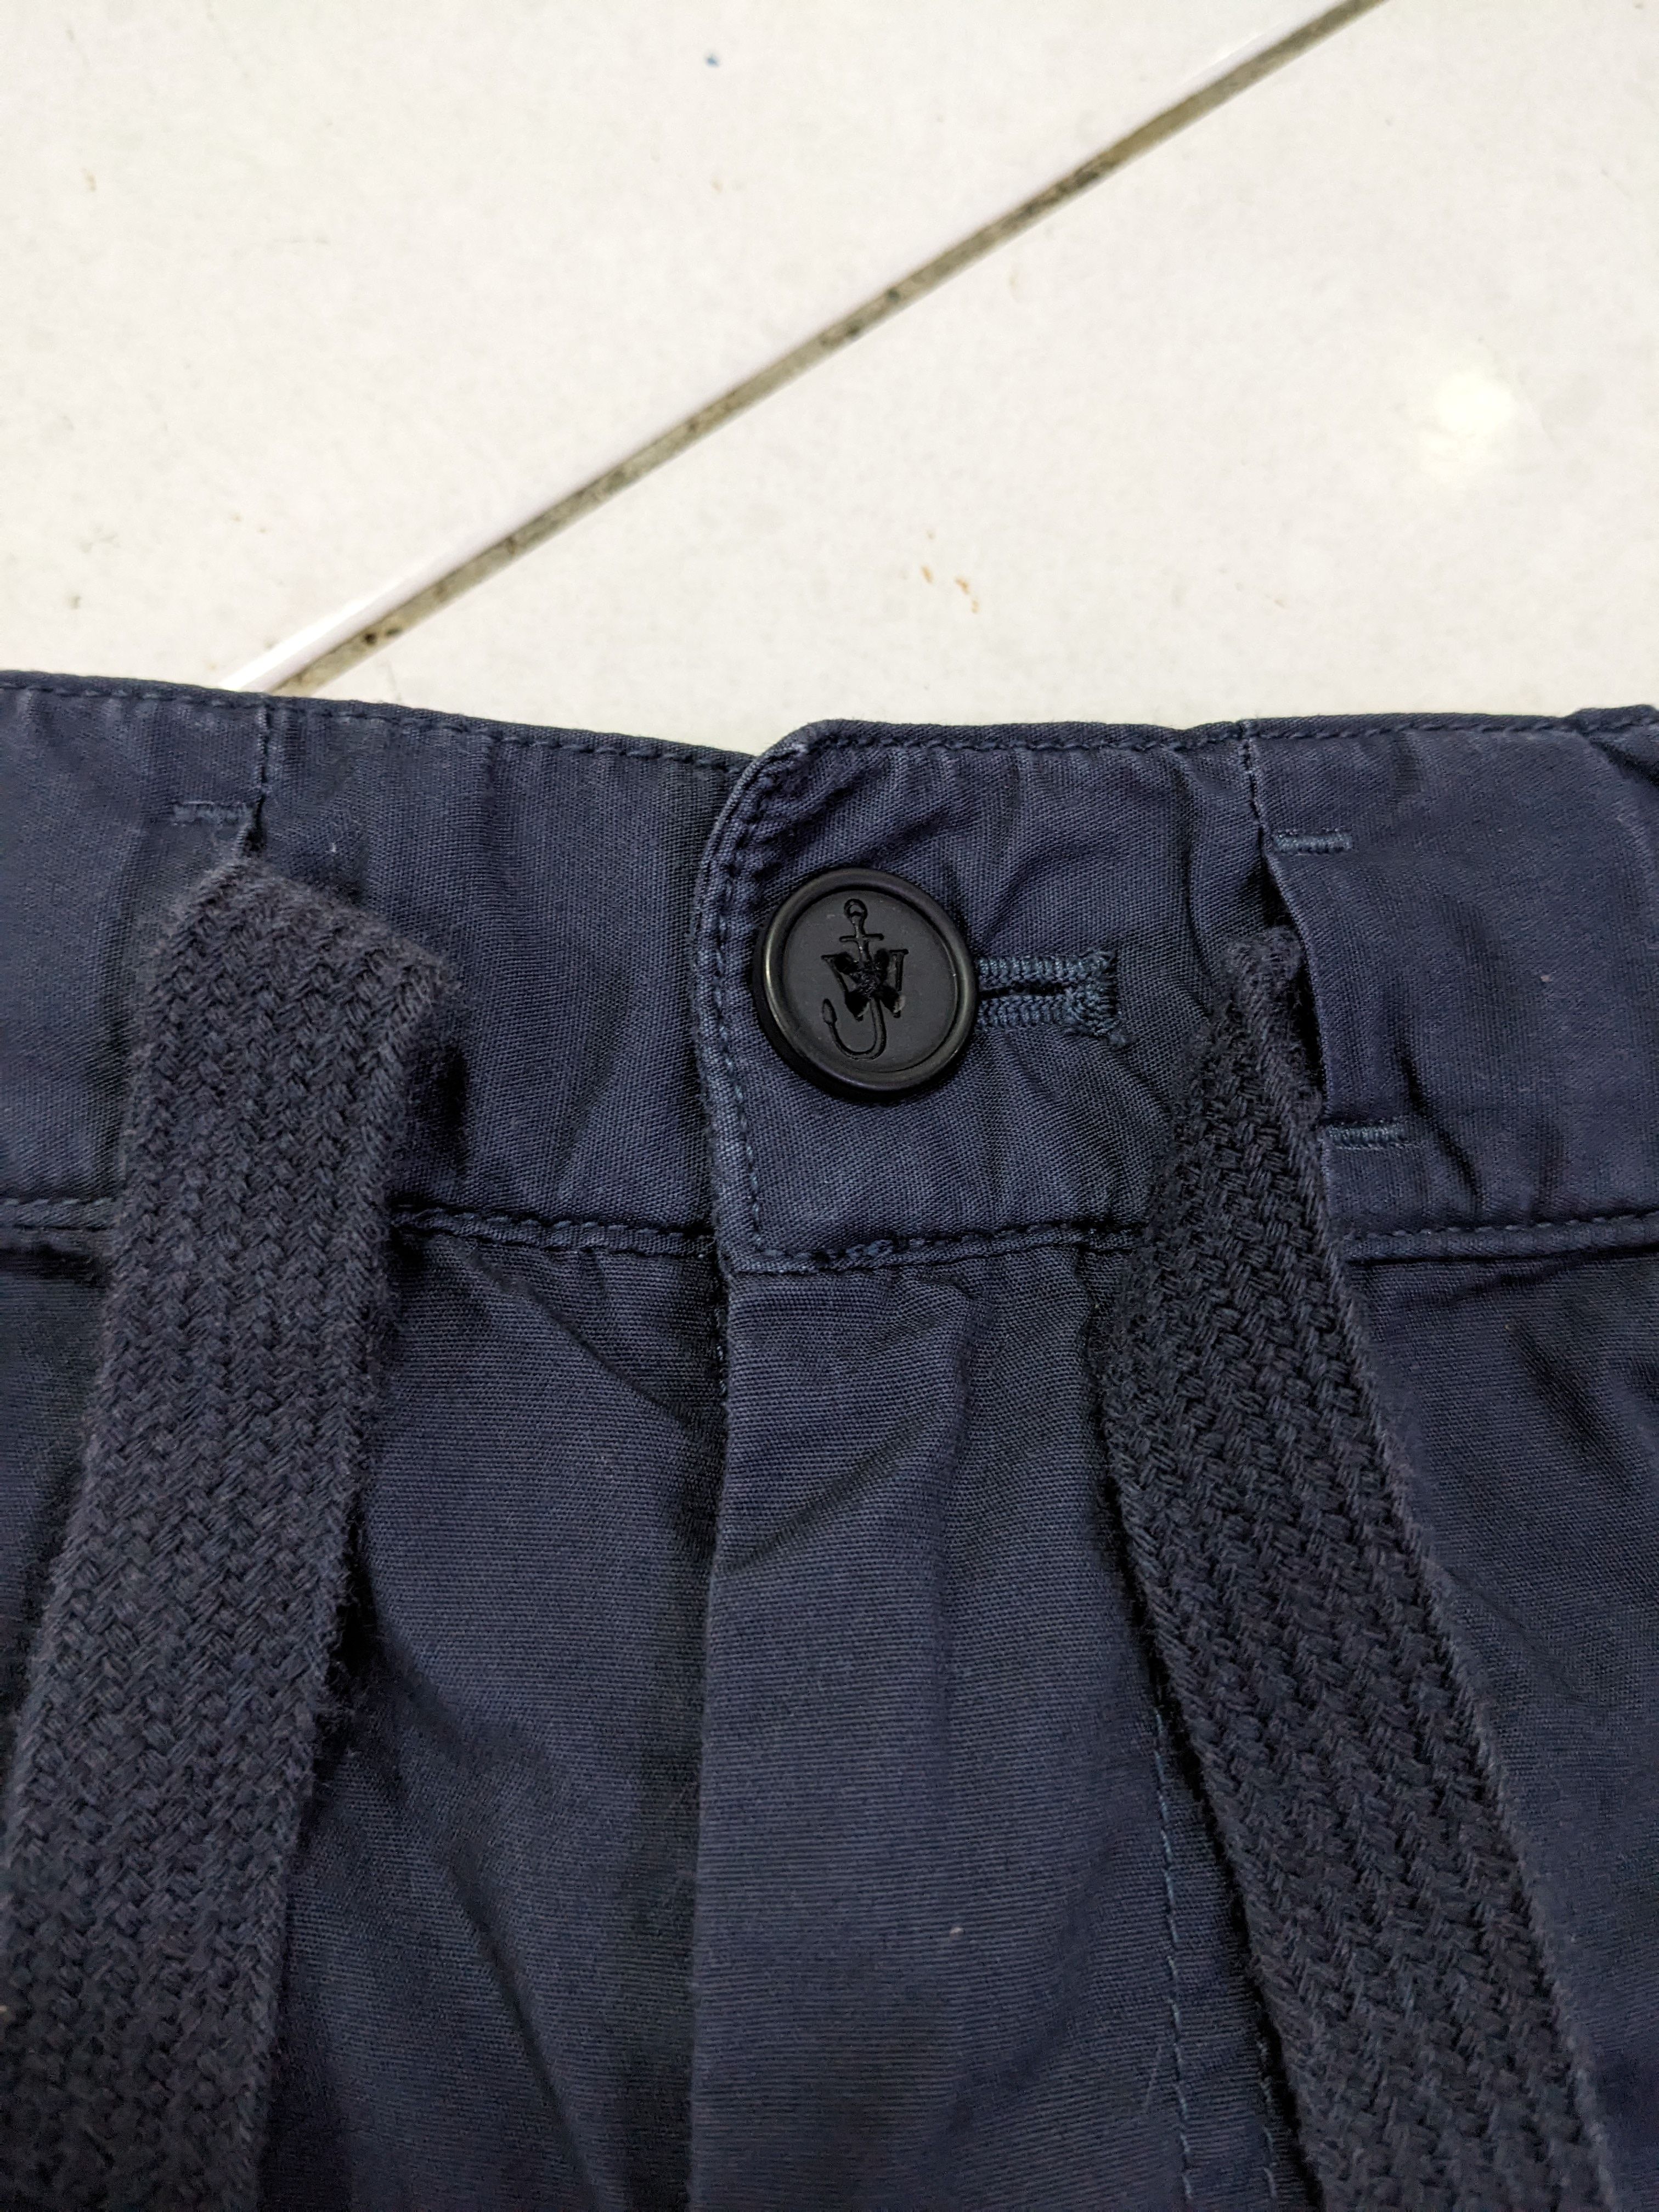 Uniqlo JW Anderson Casual Pants Drawstring Navy Blue - 4